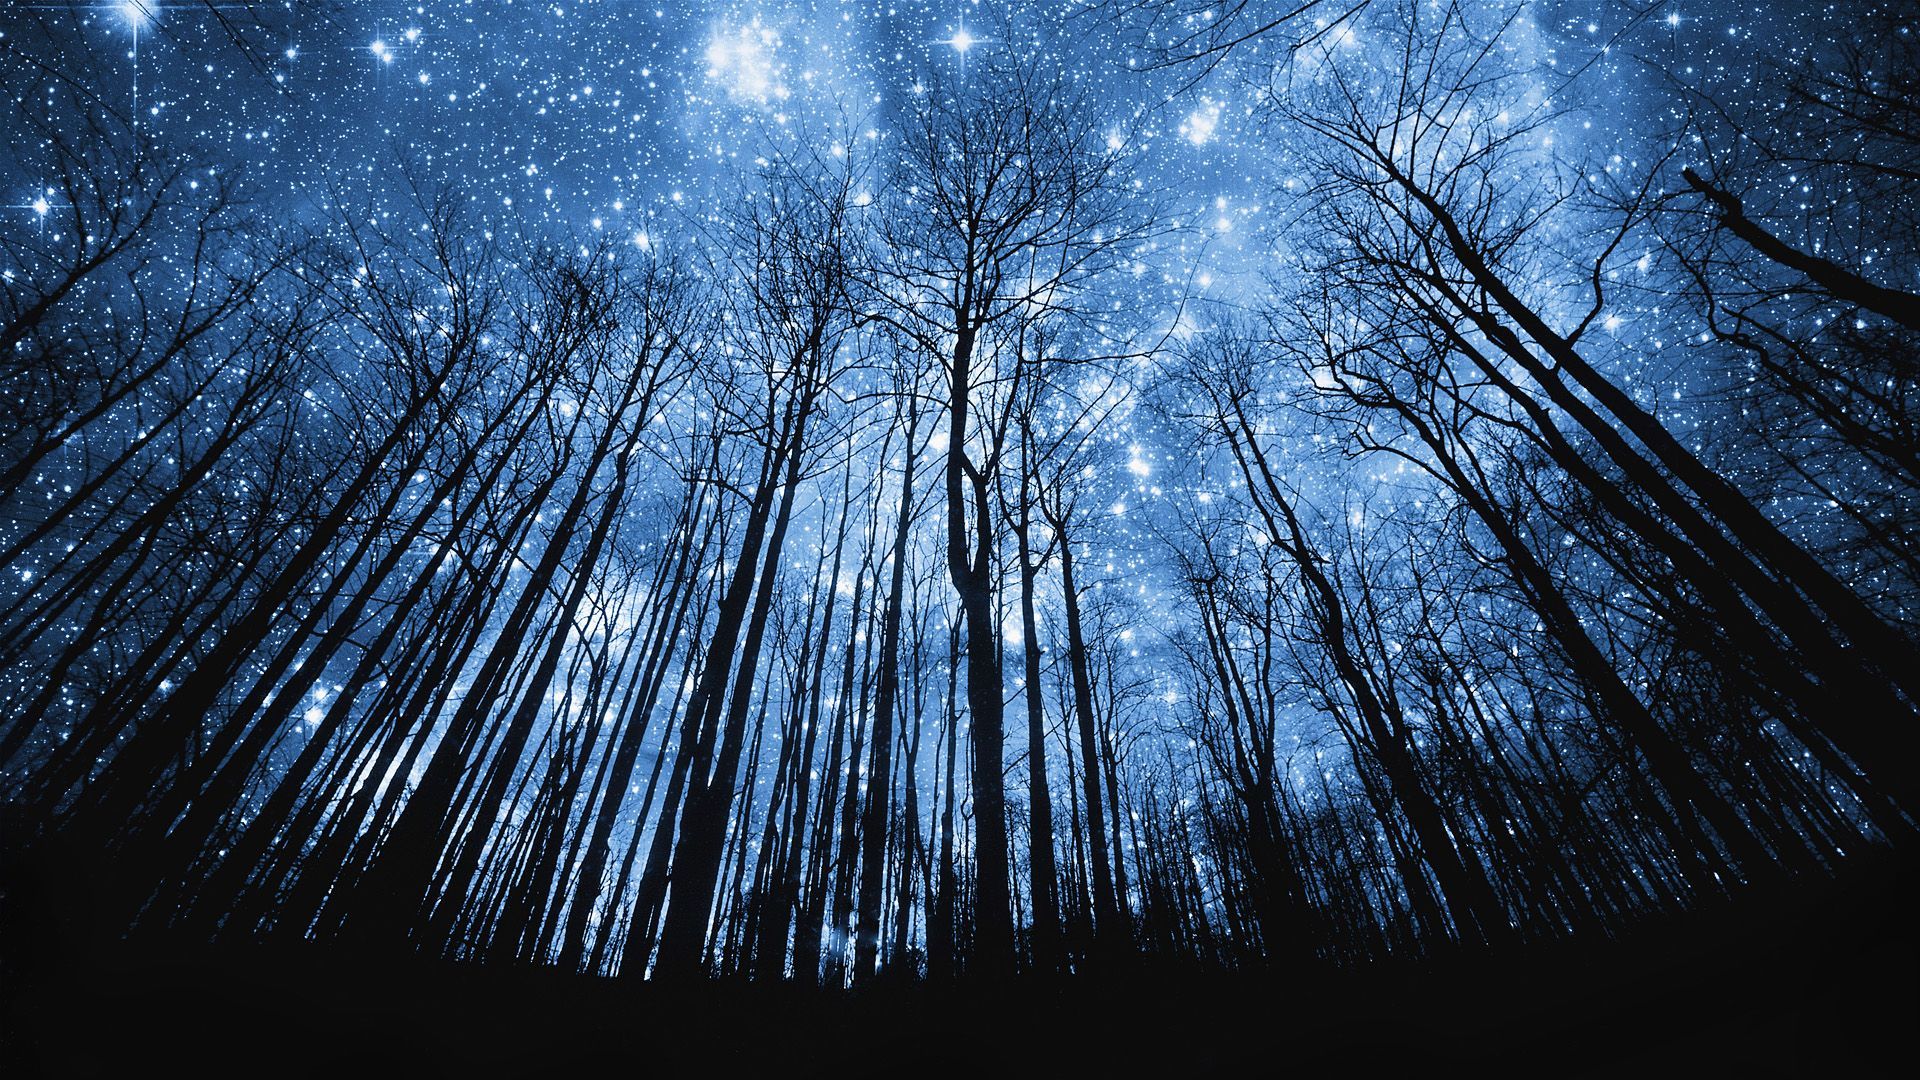 Starry Night Sky HD Wallpaper 1080p. Night sky wallpaper, Starry night wallpaper, Starry night sky